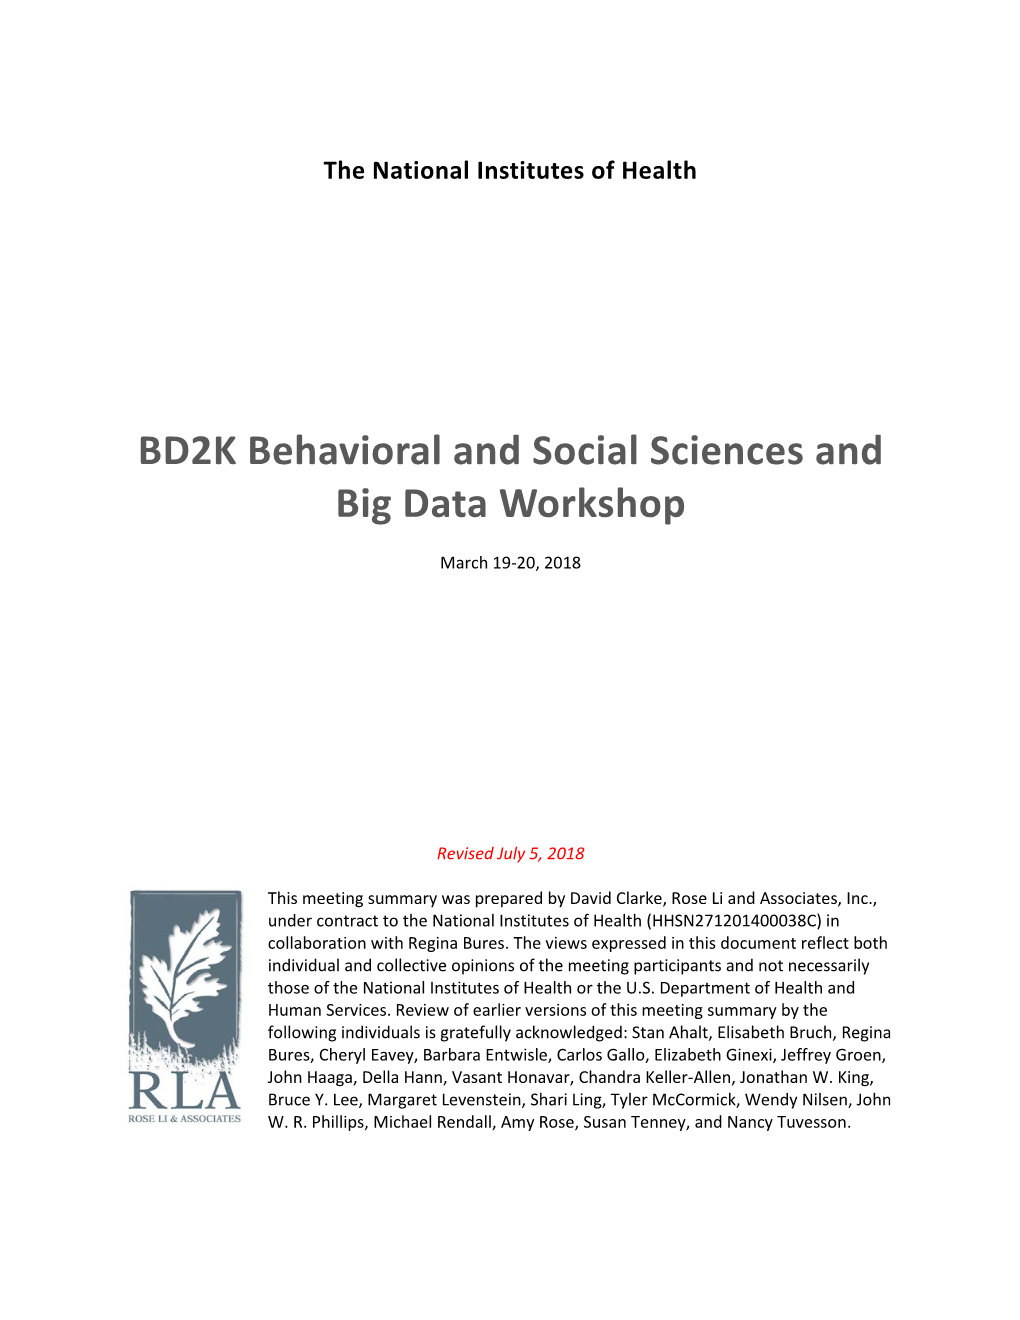 The BD2K Behavioral and Social Sciences and Big Data Workshop